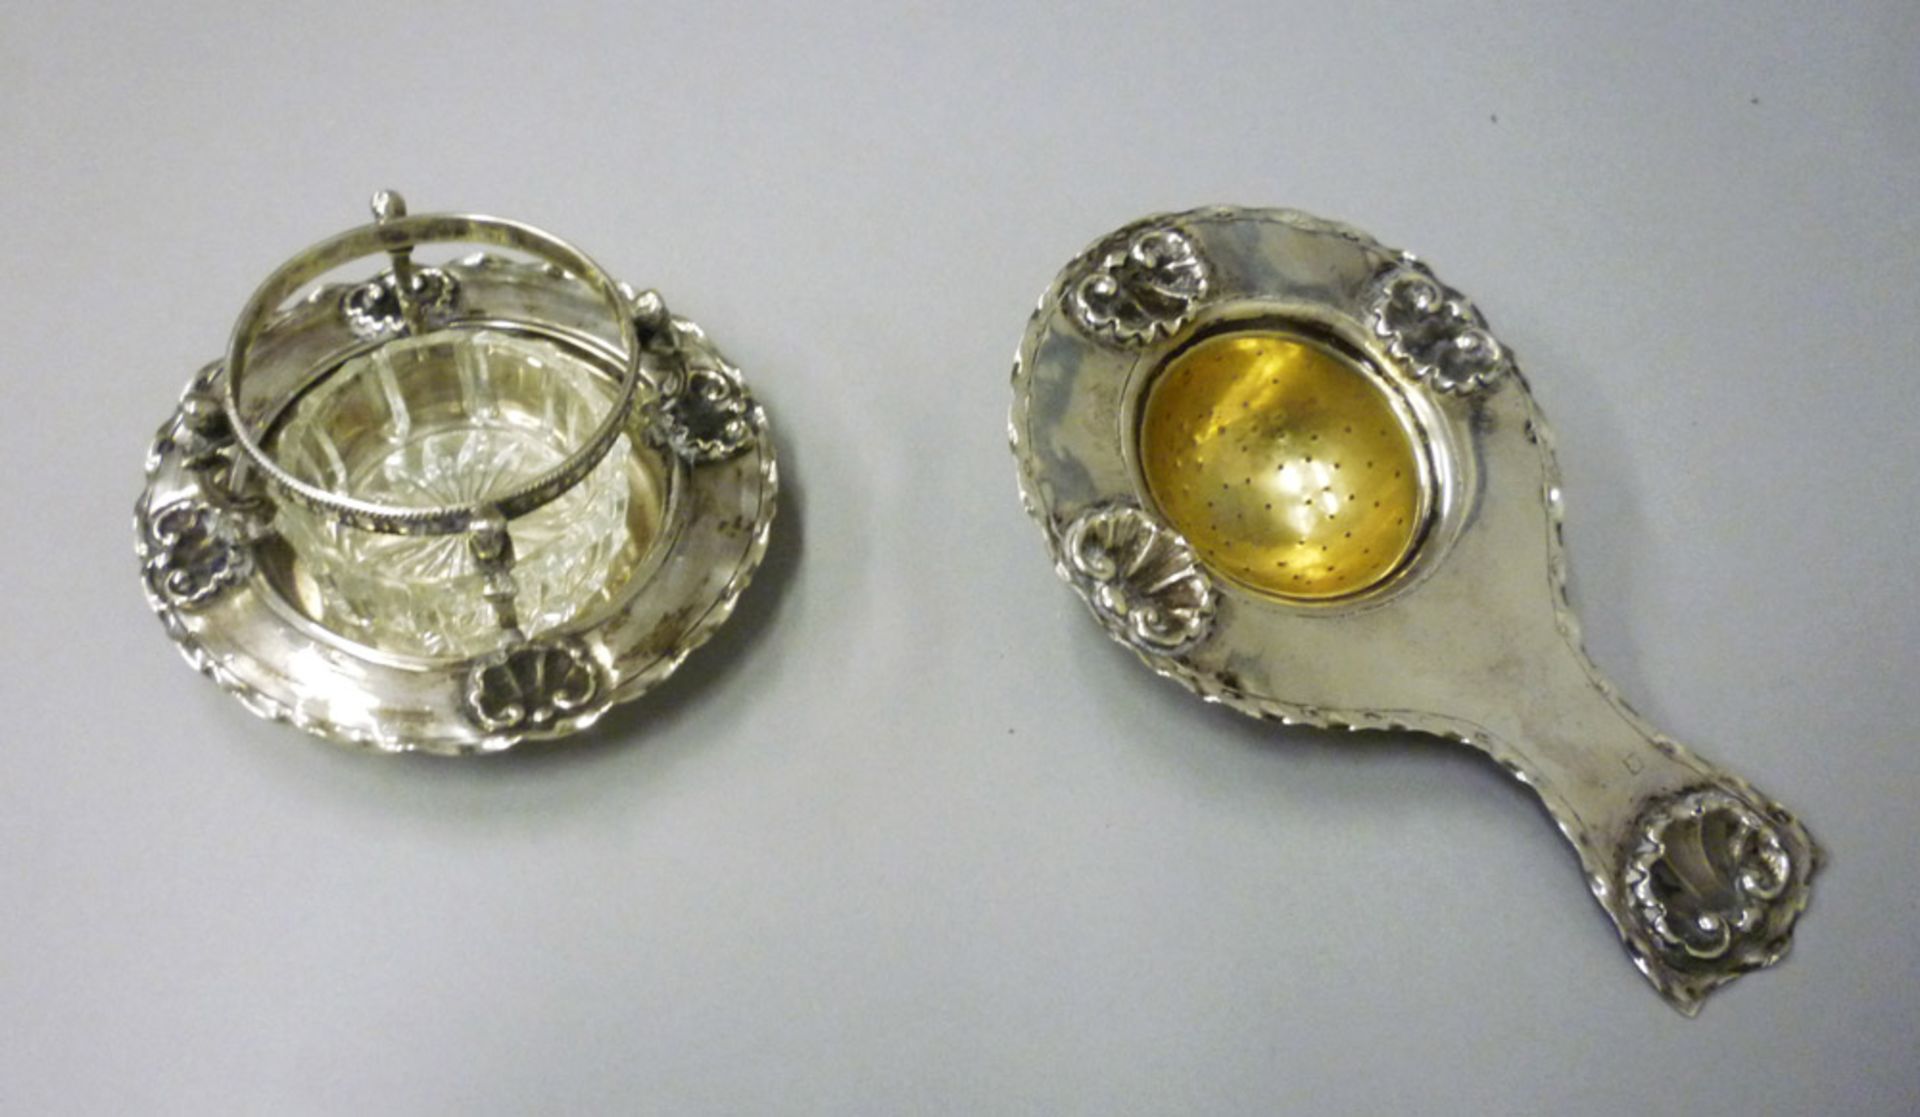 Silver saltcellar and passe, 20th century. Measures cm. 3.5 x 9 x 15.SALIERA E PASSINO IN ARGENTO,